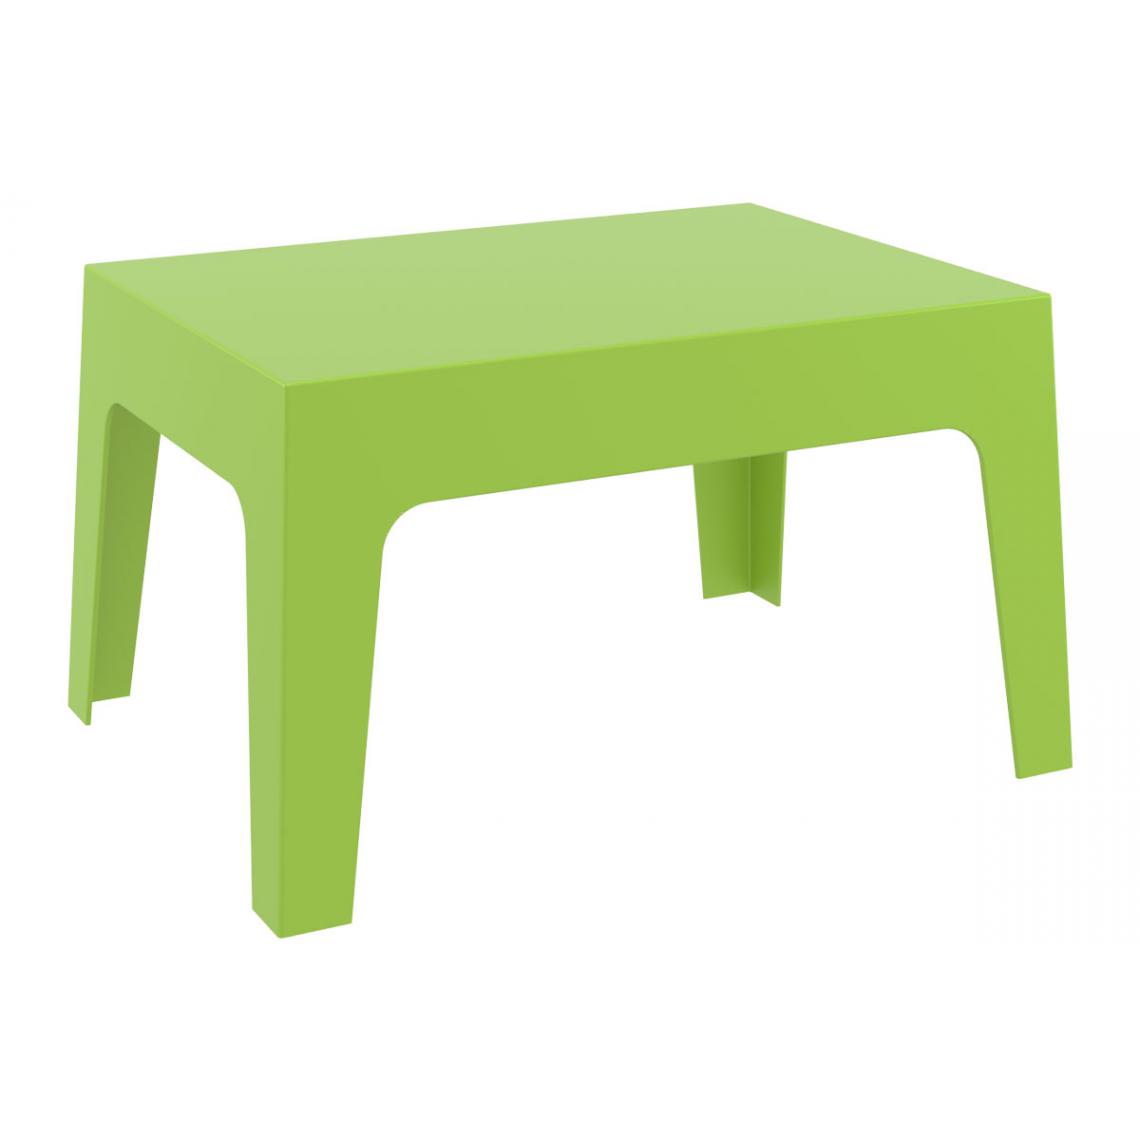 Icaverne - Splendide Table collection Dakar couleur vert - Chaises